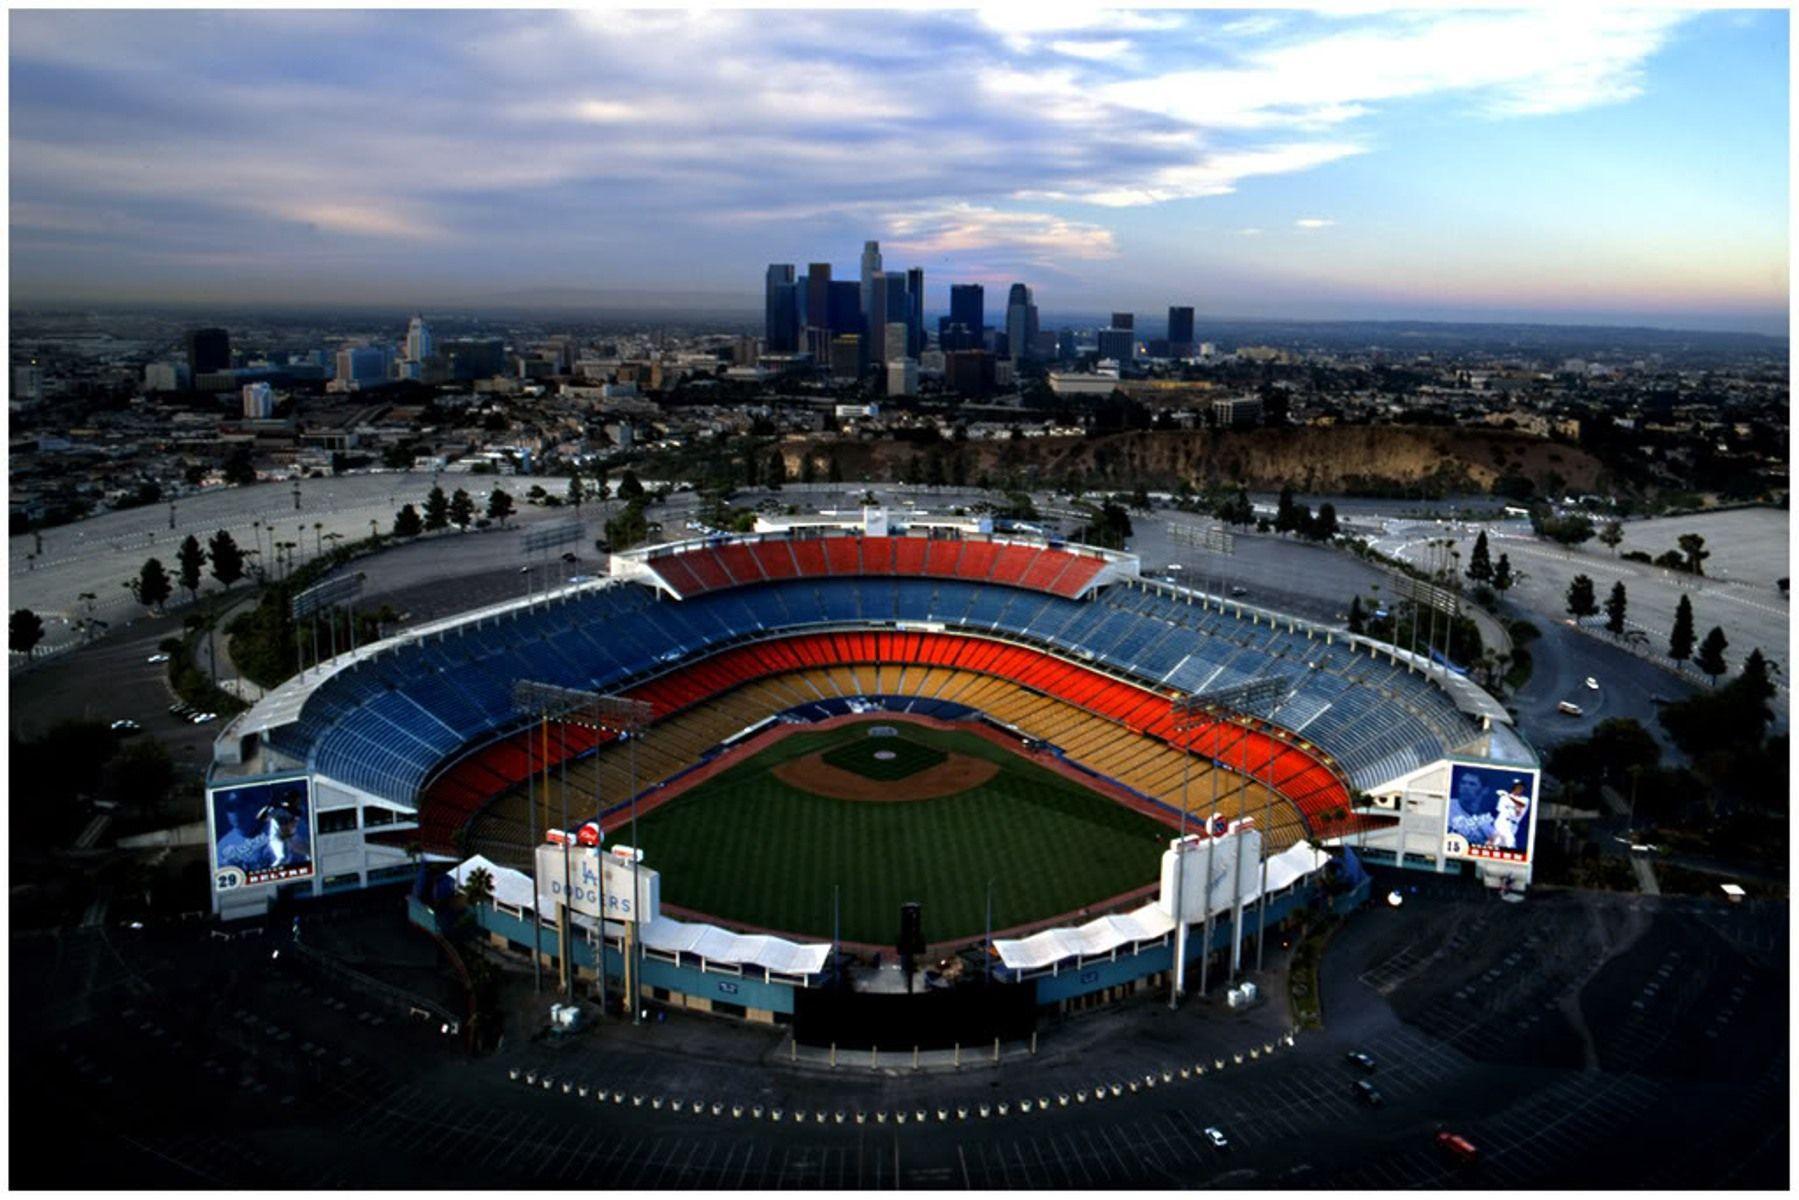 Dodgers Stadium Wallpaper